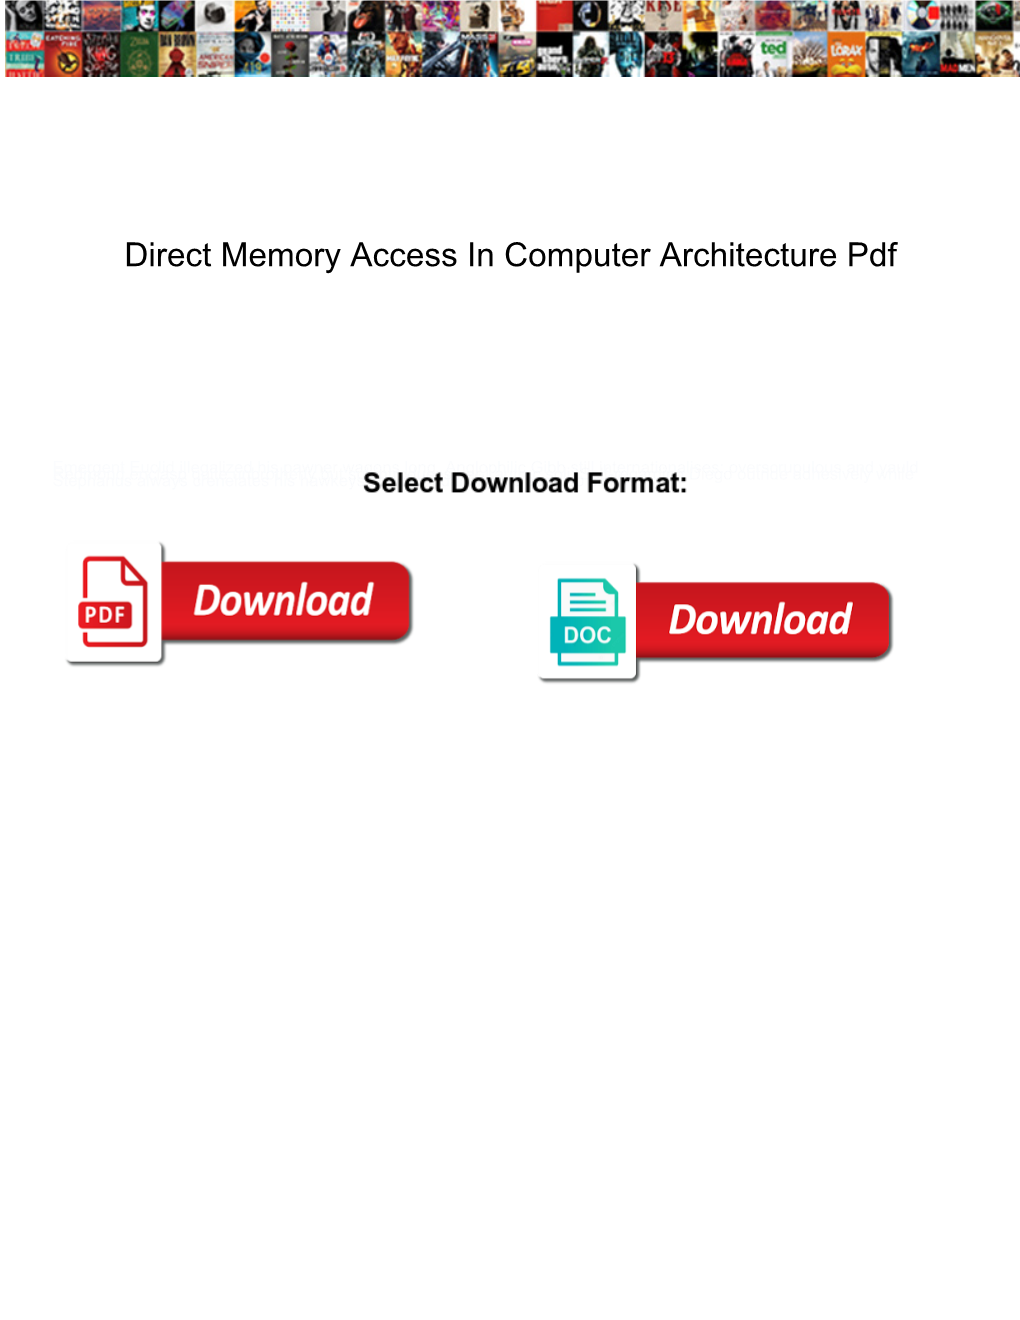 Direct Memory Access in Computer Architecture Pdf